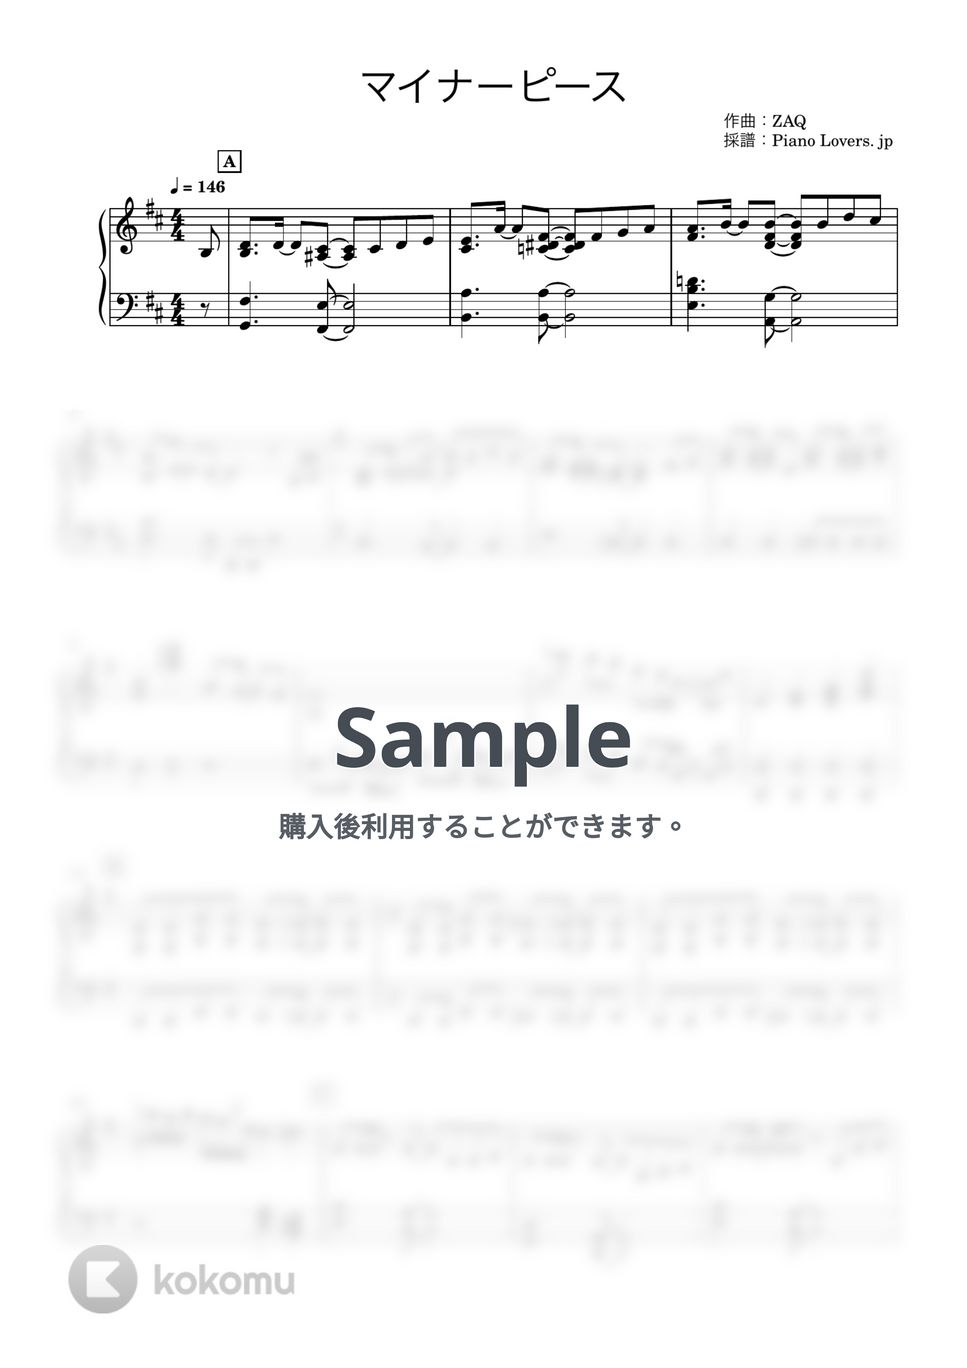 ZAQ - マイナーピース(Minor Piece) (ようこそ実力至上主義の教室へ) by Piano Lovers. jp